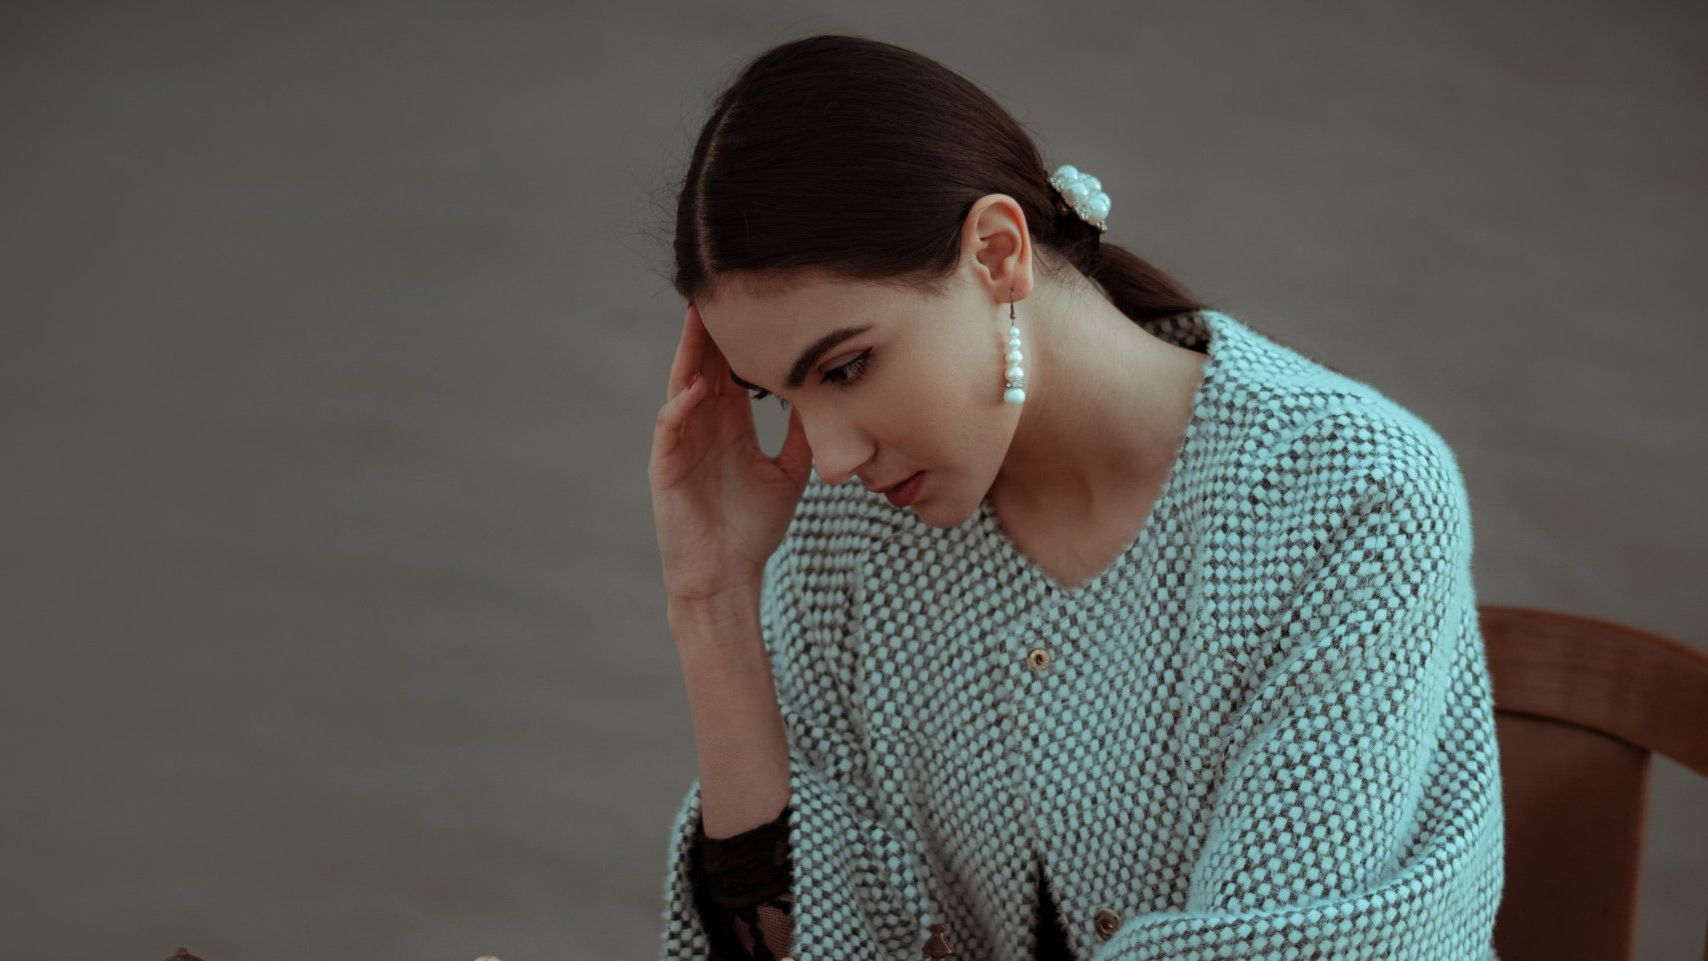 a woman wearing pearl earrings holds her head